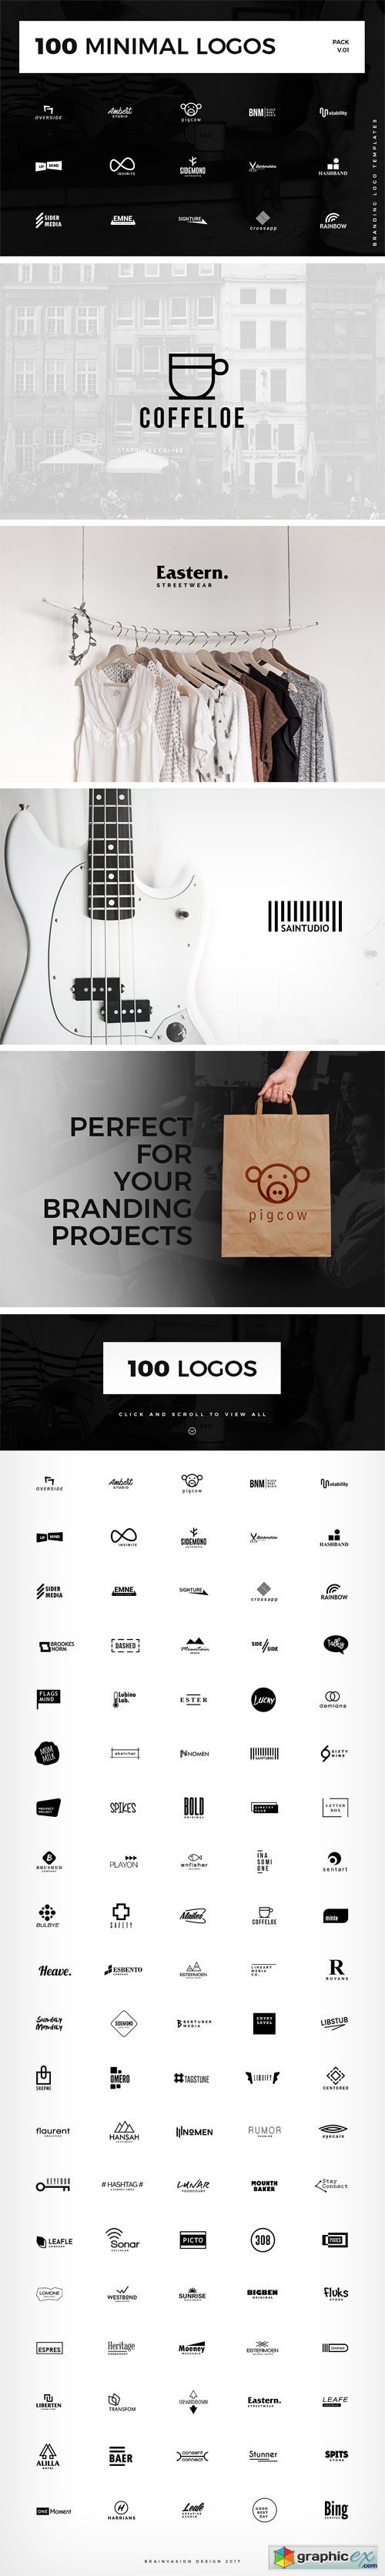 100 Minimal Logo Templates